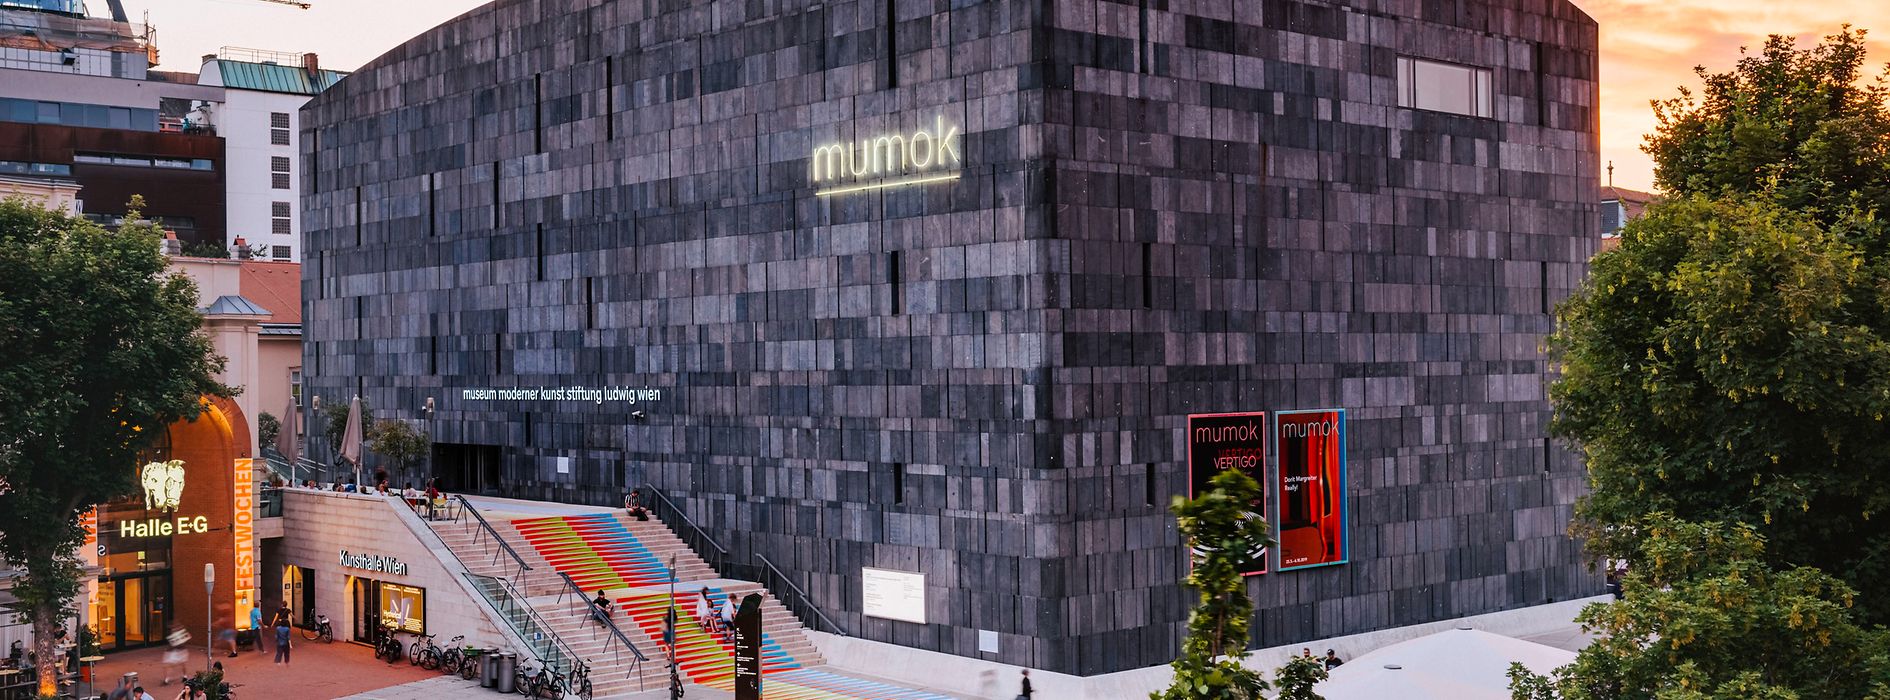 mumok, Museo de Arte Moderno, vista exterior, MuseumsQuartier (Barrio de los Museos) 